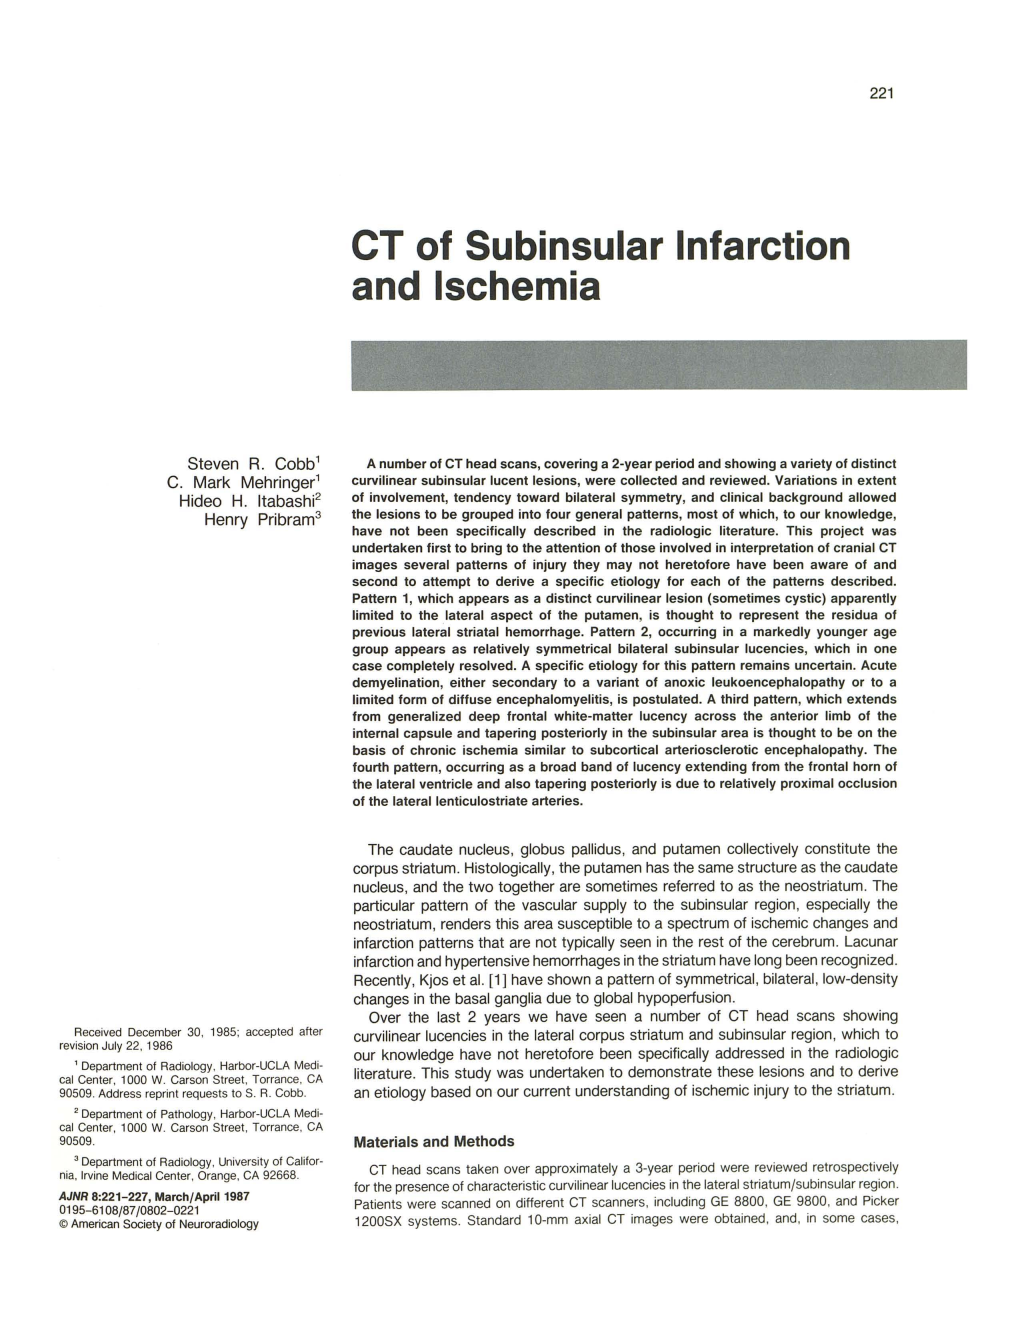 CT of Subinsular Infarction and Ischemia